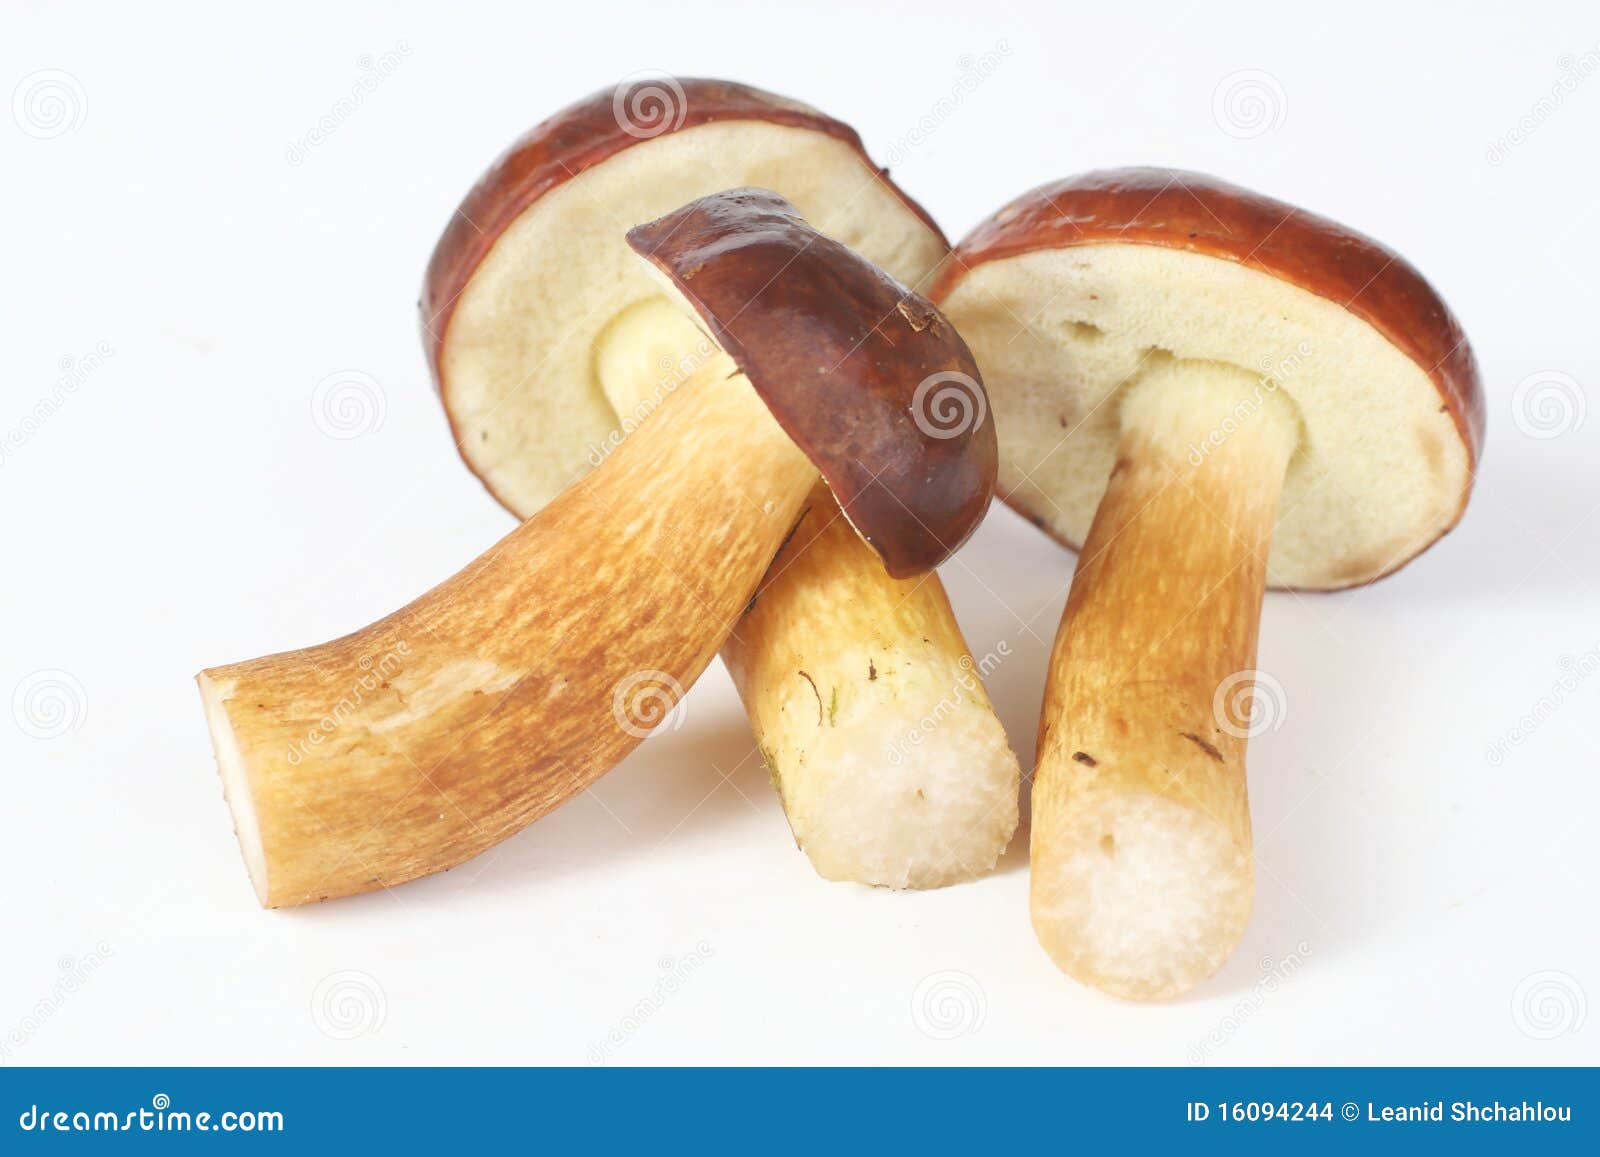 Three raw mushrooms. Mushroom (Xerocomus badius, Boletus badius) isolated on white background